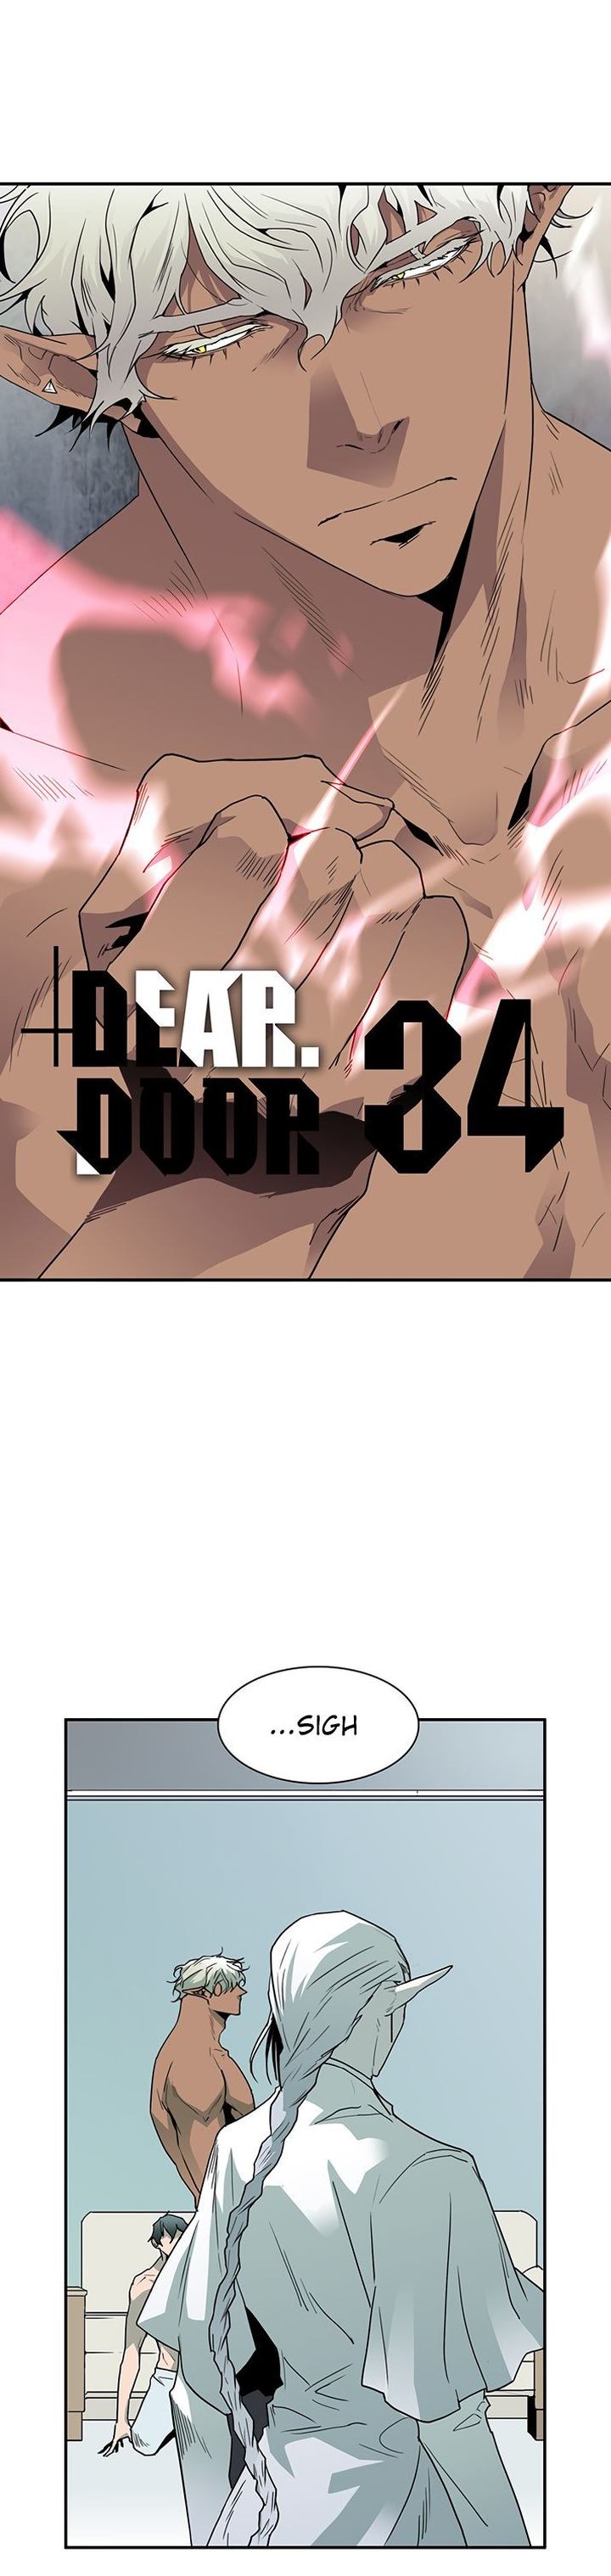 Dear Door 34 1